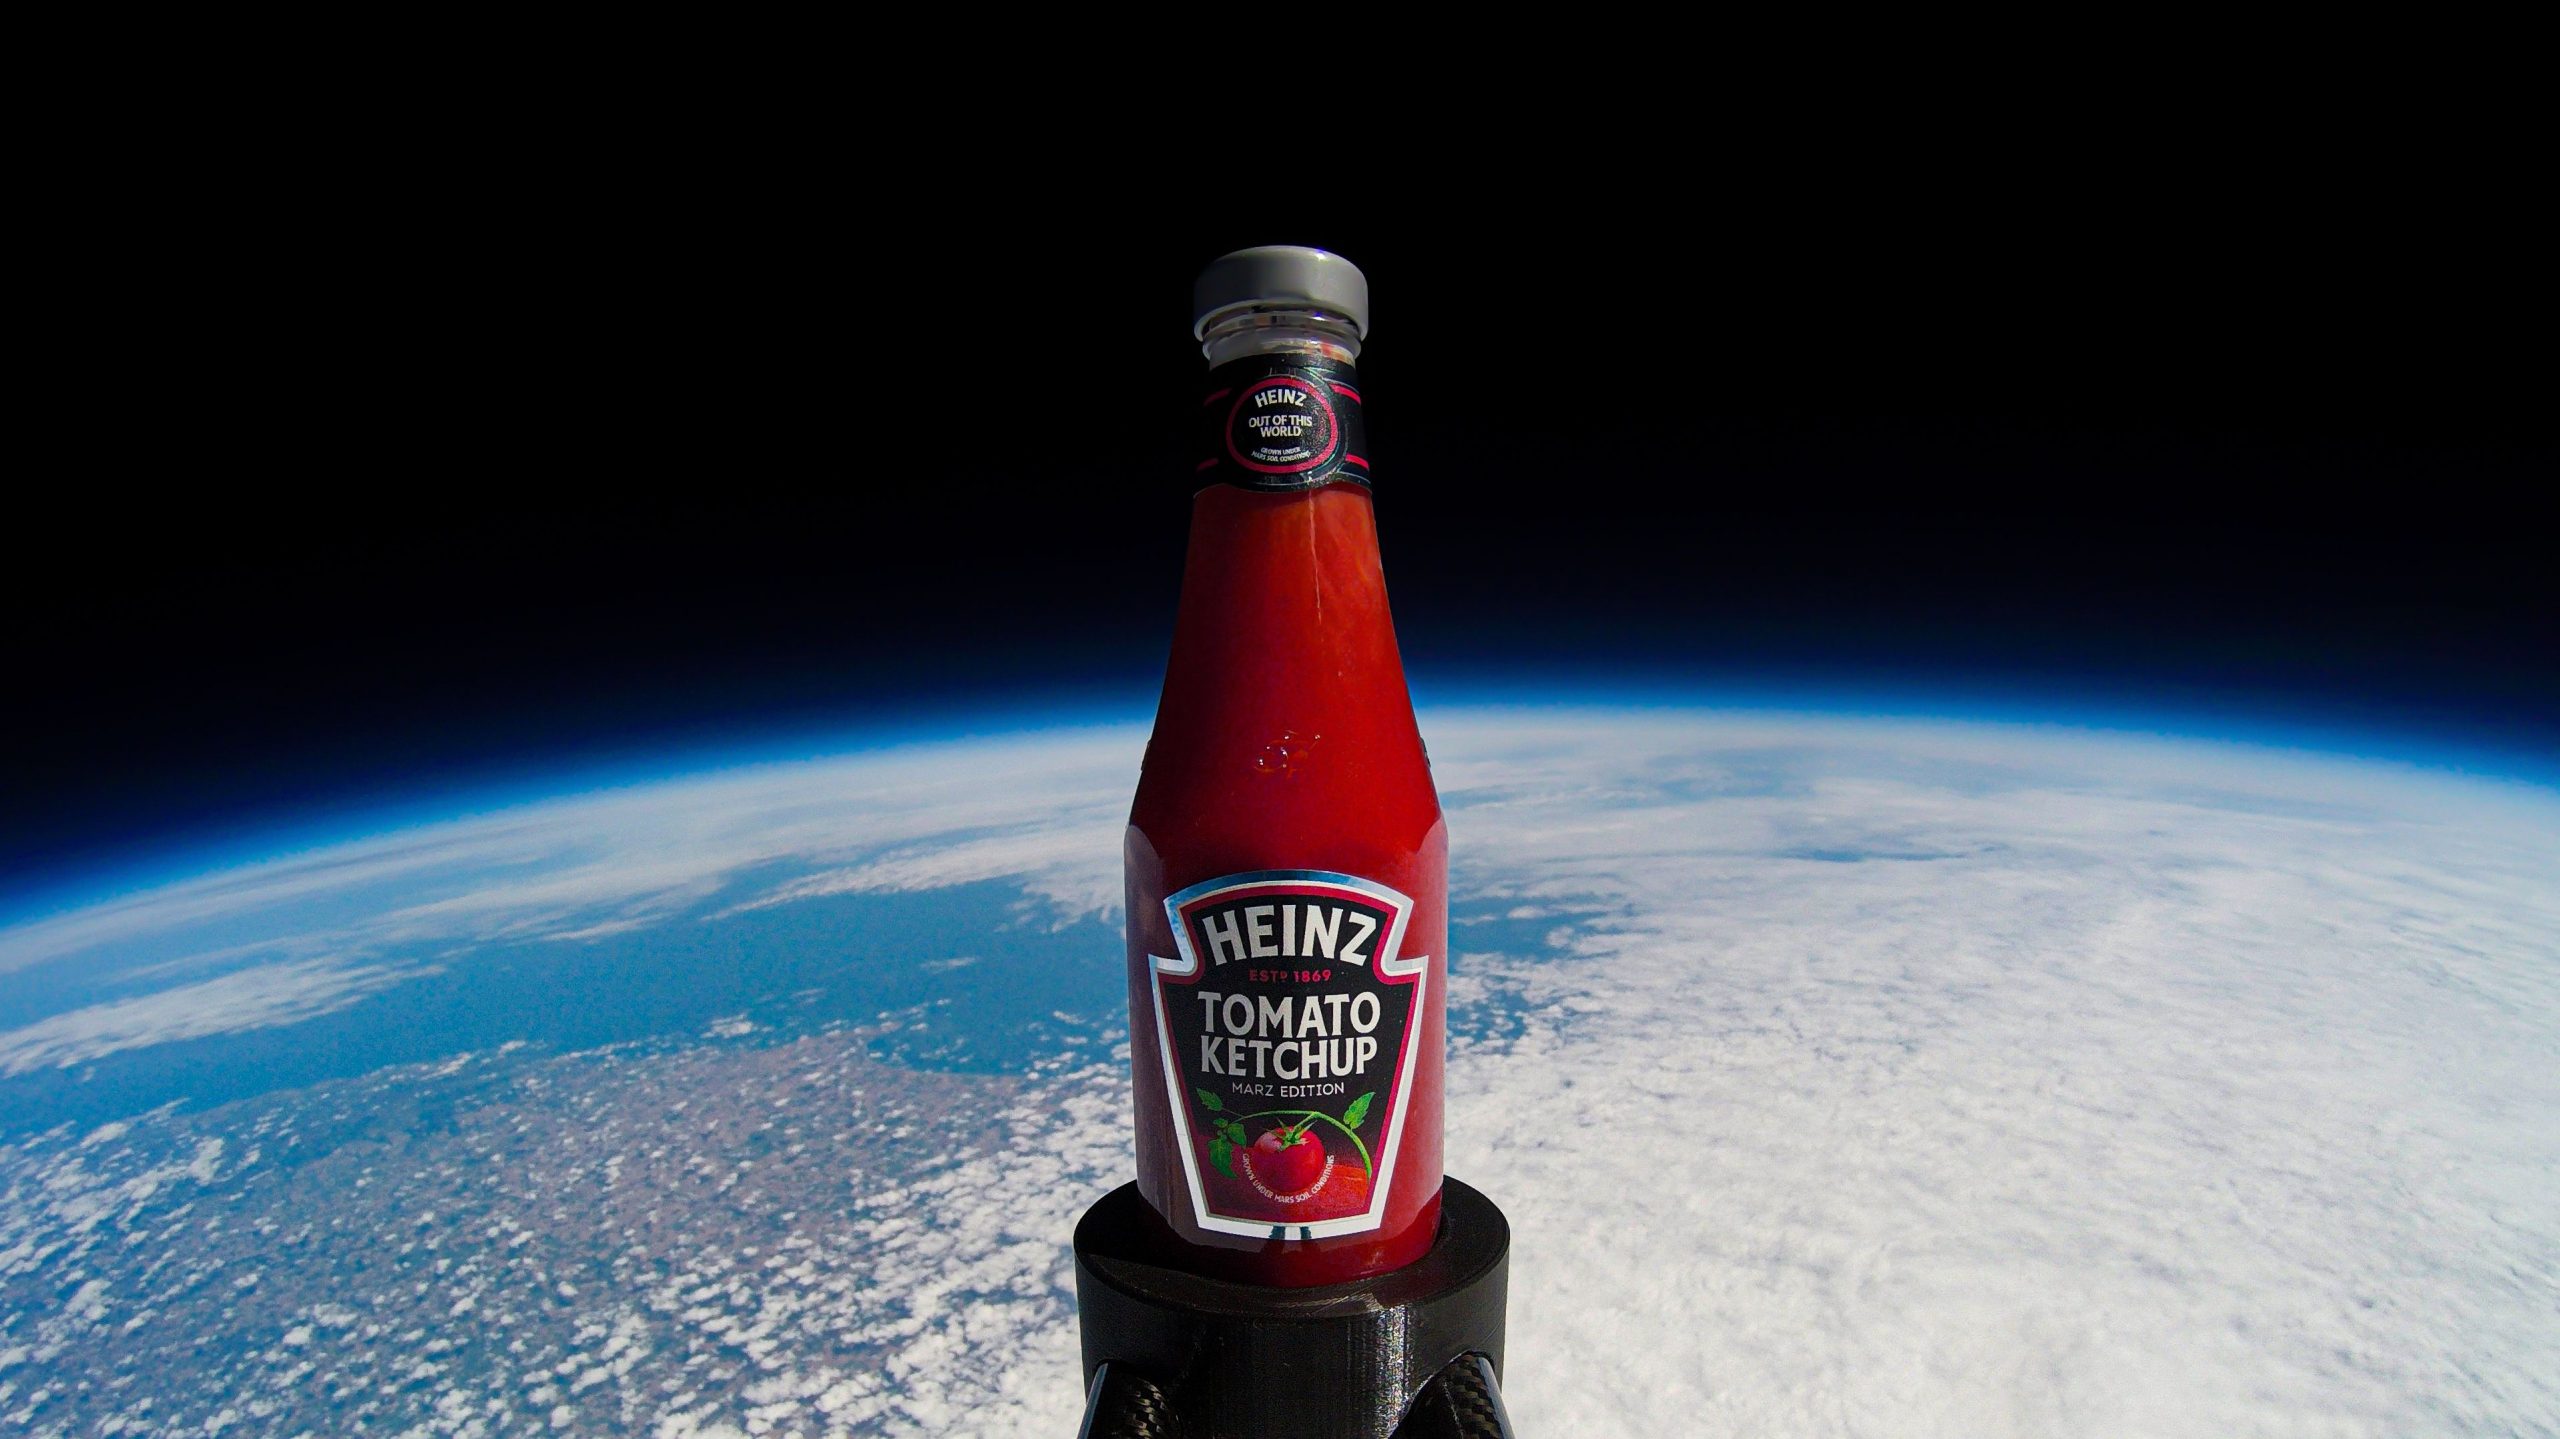 Heinz Tomato Ketchup ‘Marz Edition’